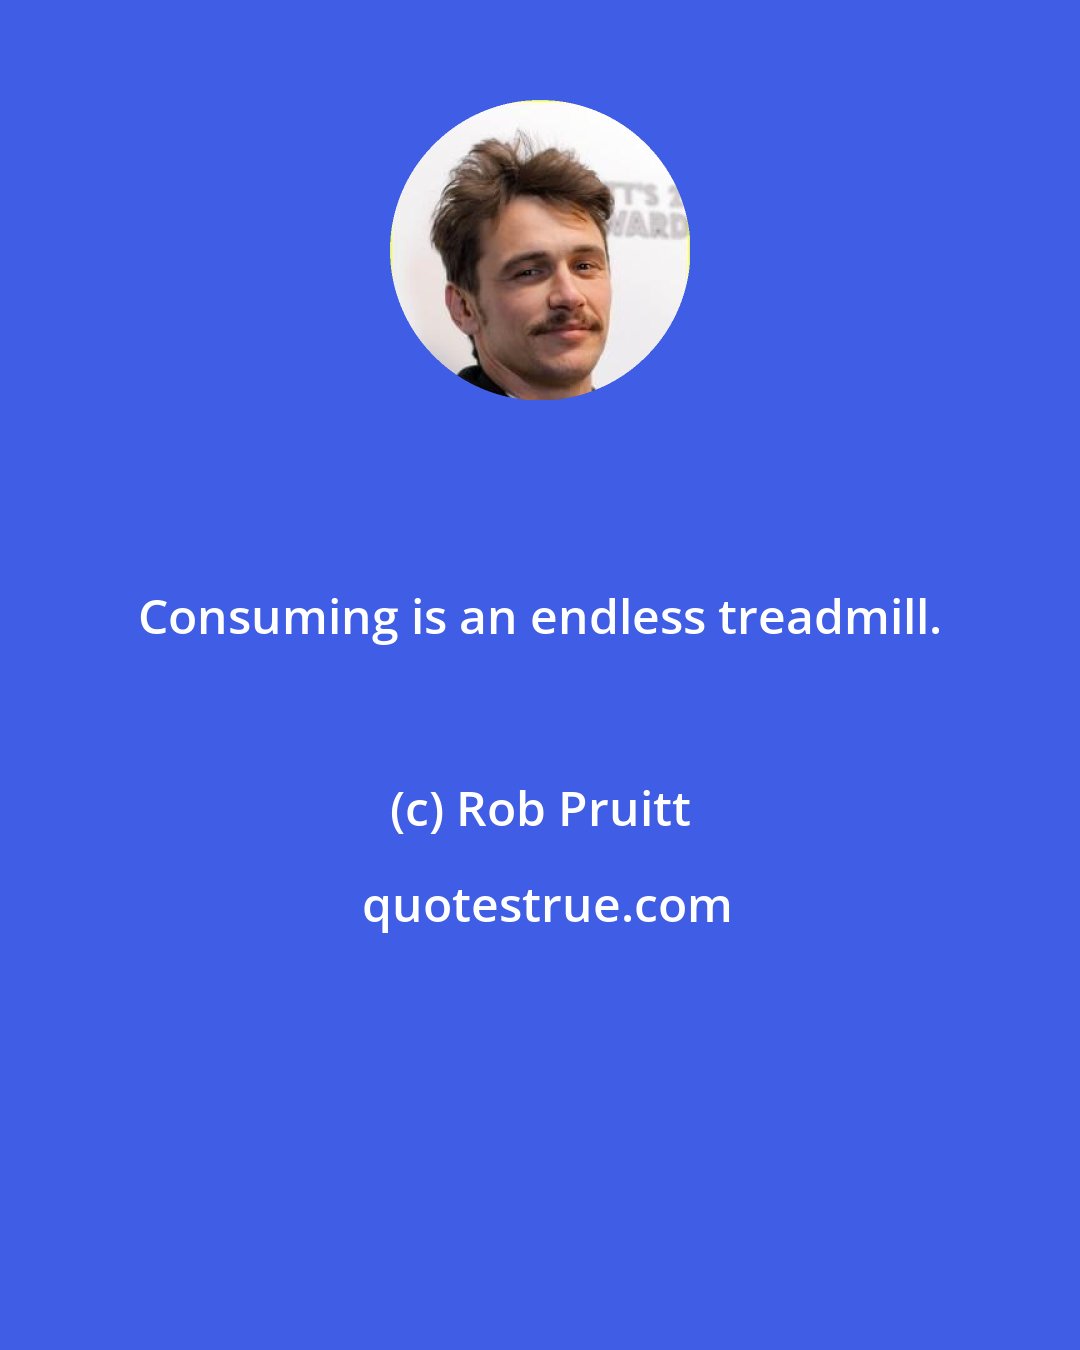 Rob Pruitt: Consuming is an endless treadmill.